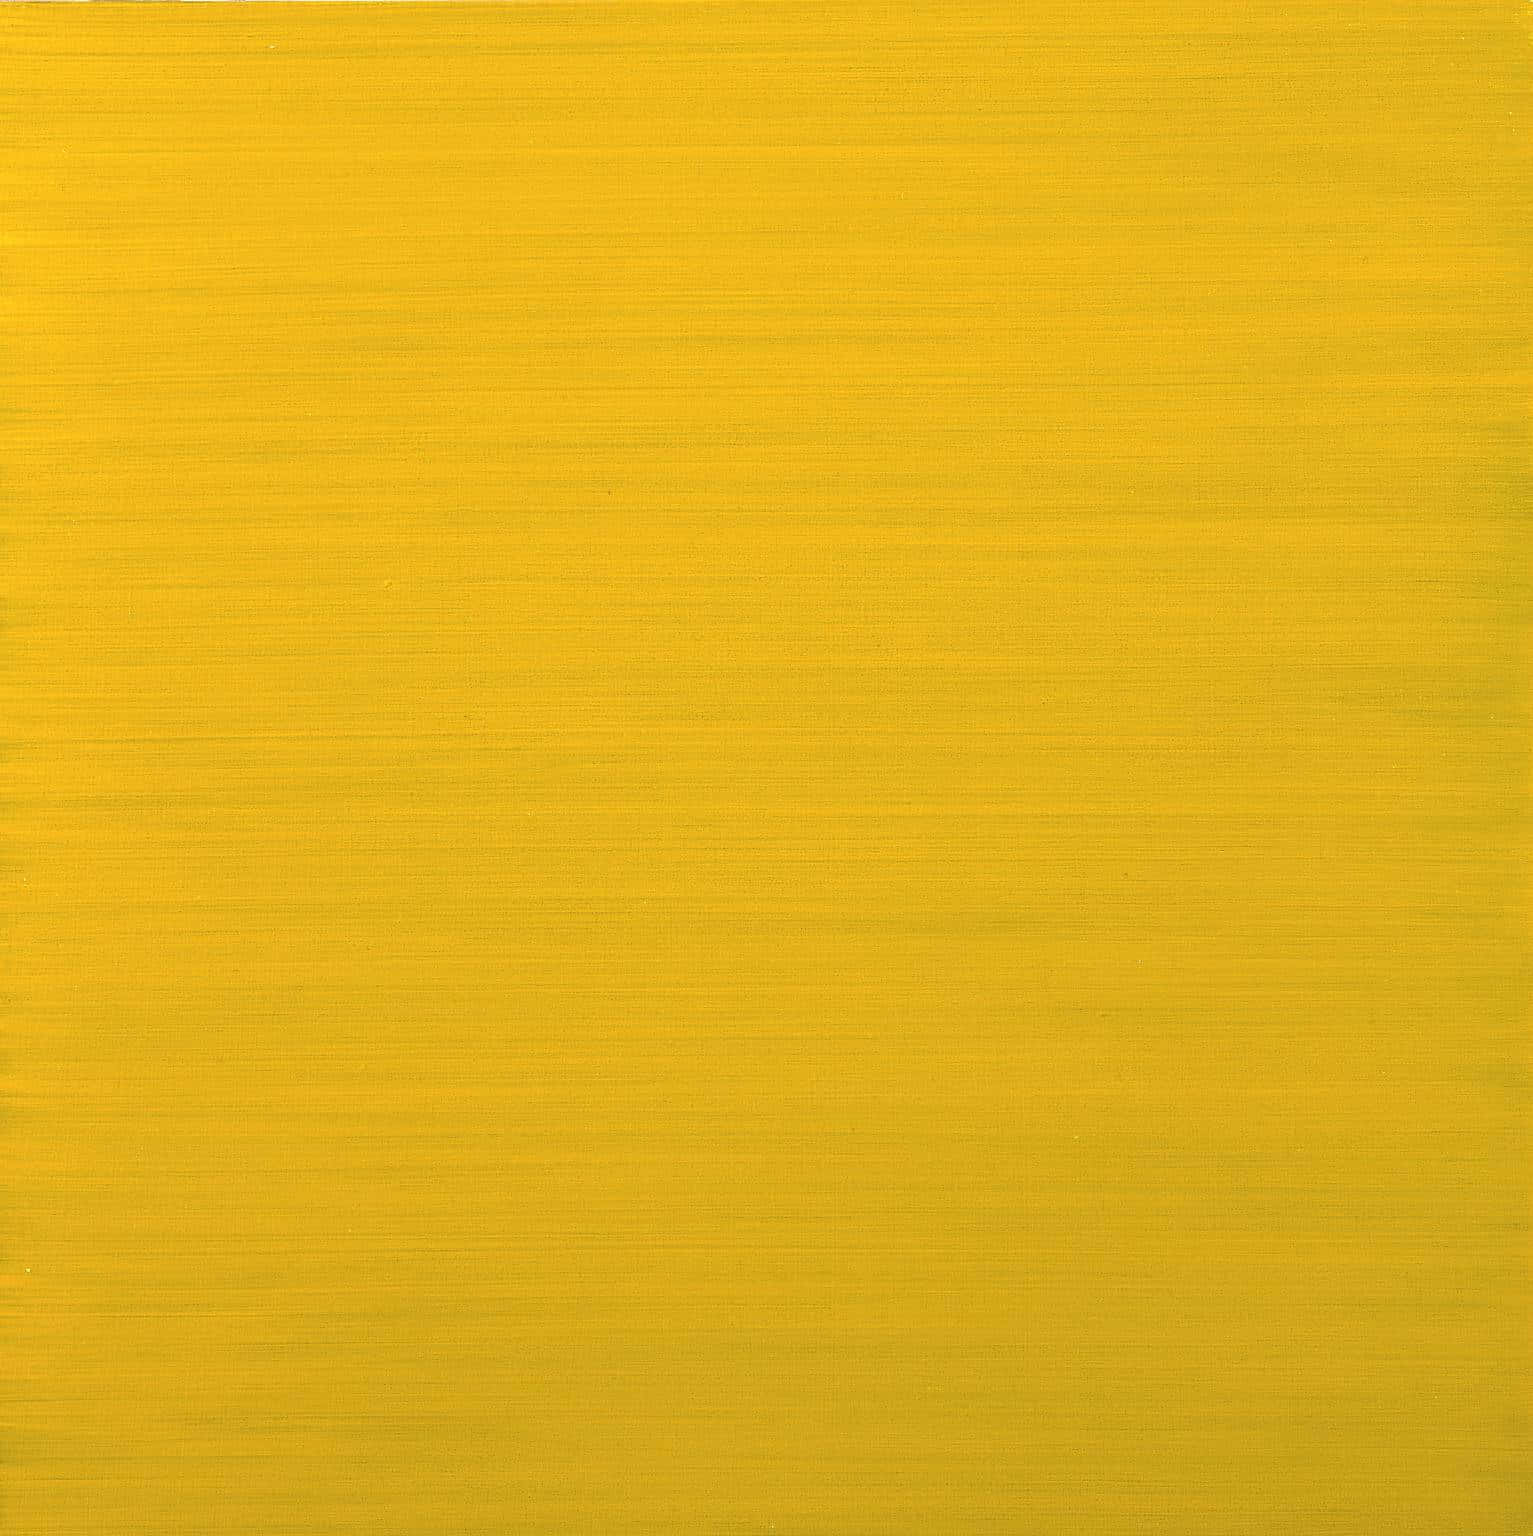 Trayectoriasde Pintura Amarillas Vibrantes En Un Lienzo. Fondo de pantalla